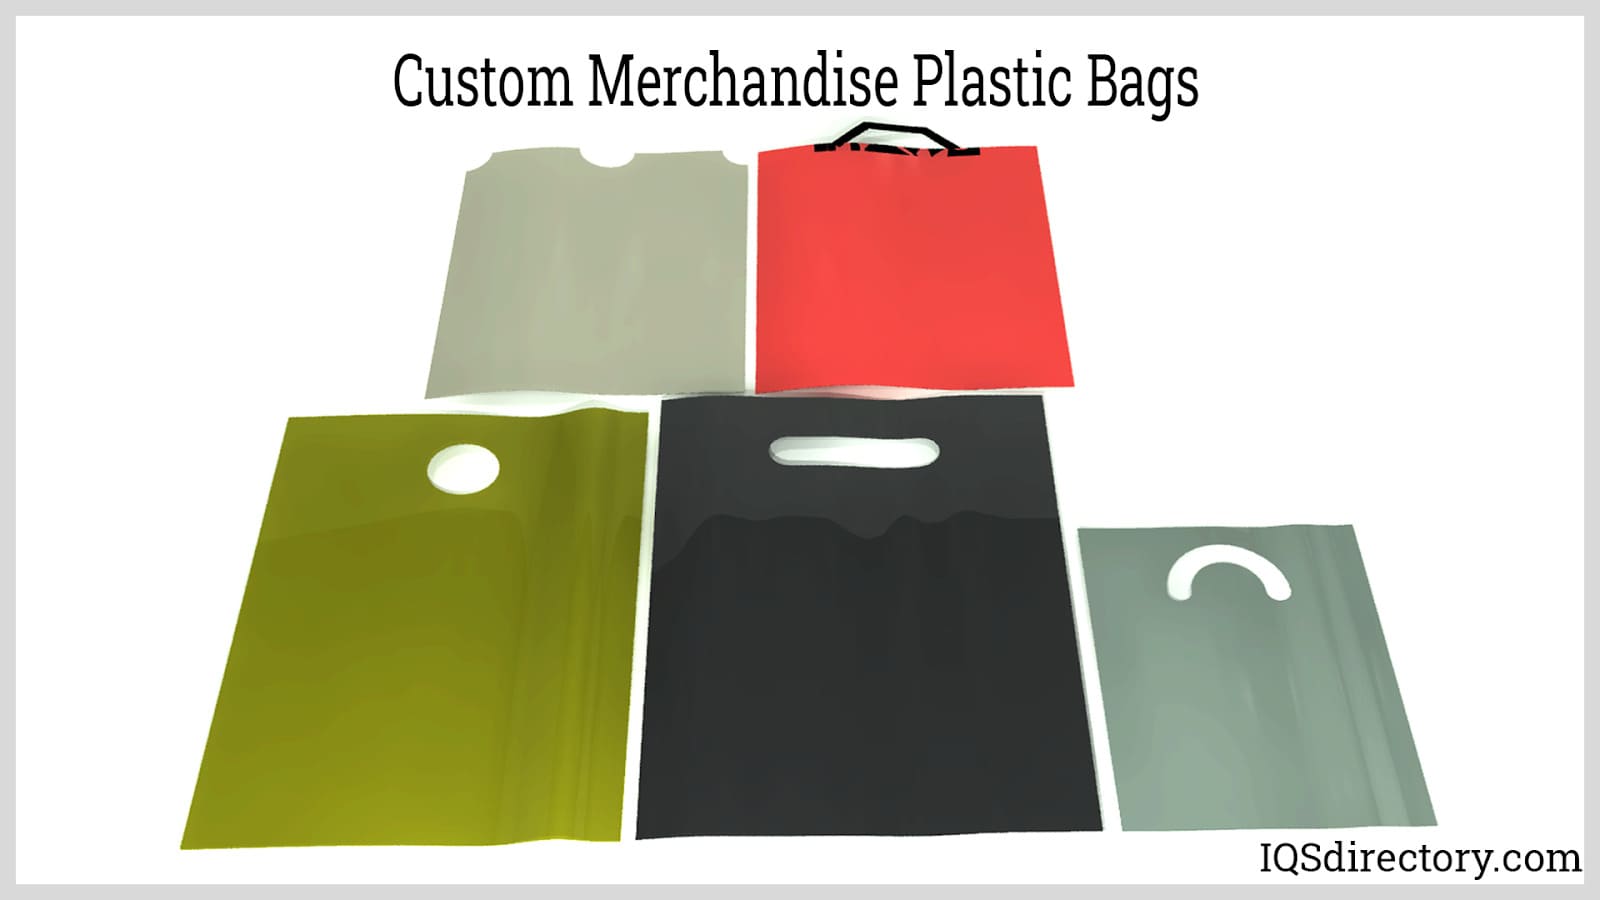 Leading paper vs plastic bags manufacturers